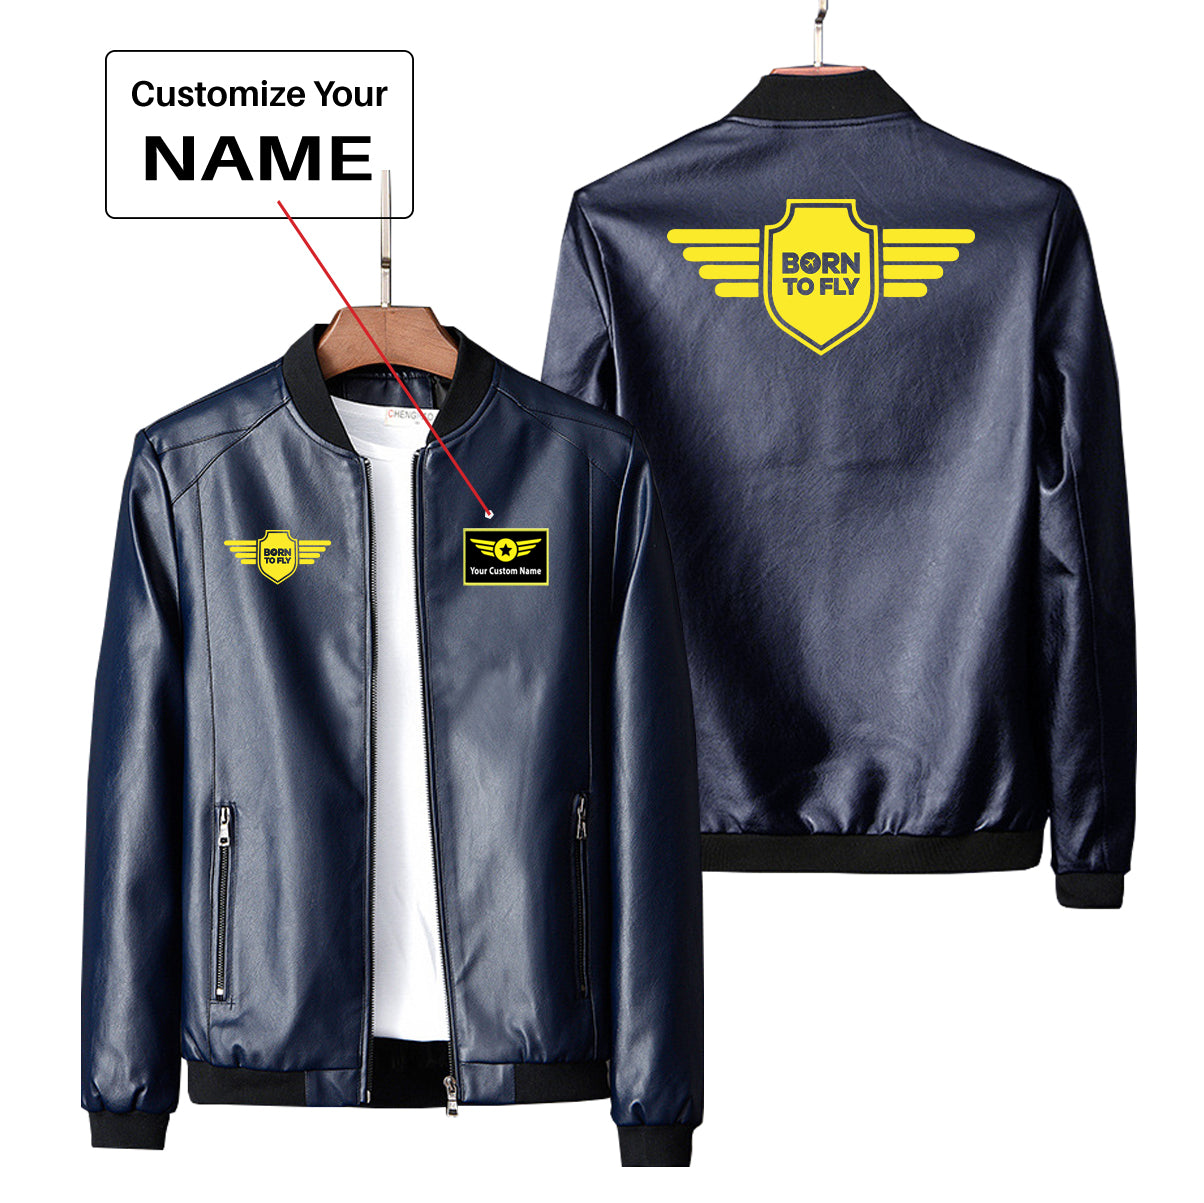 Born To Fly & Badge Designed PU Leather Jackets